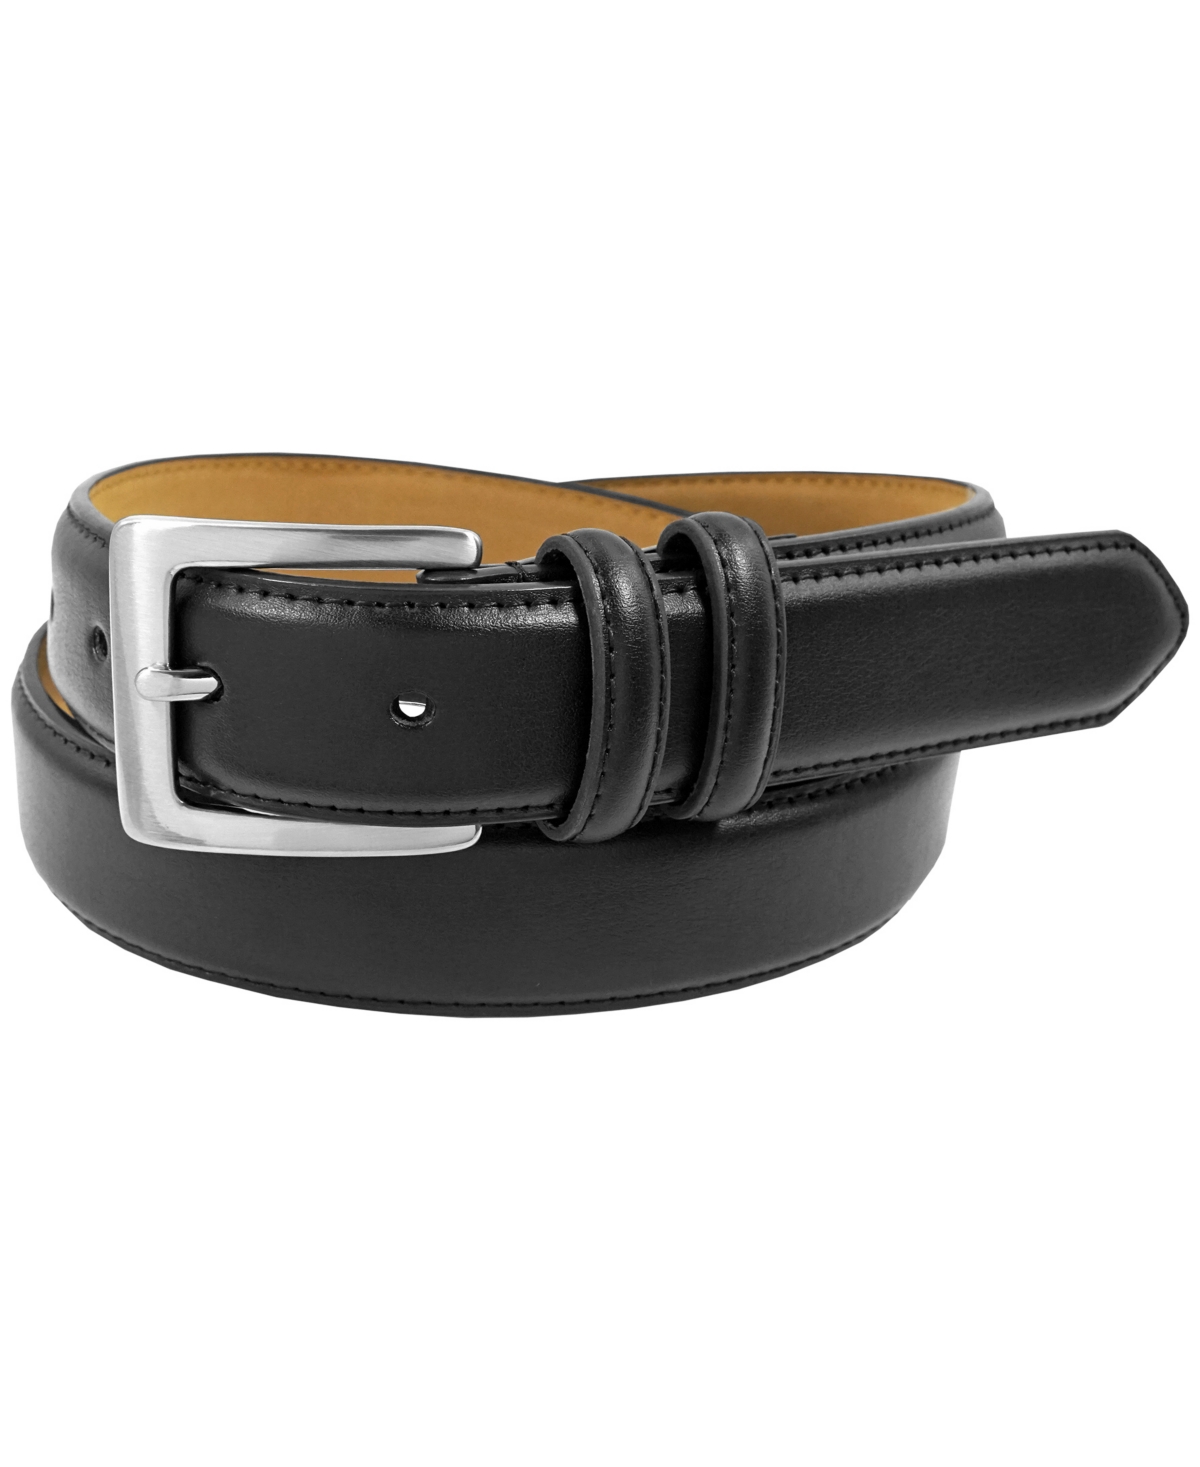 Men's Top Grain Leather Dress Belt - Black